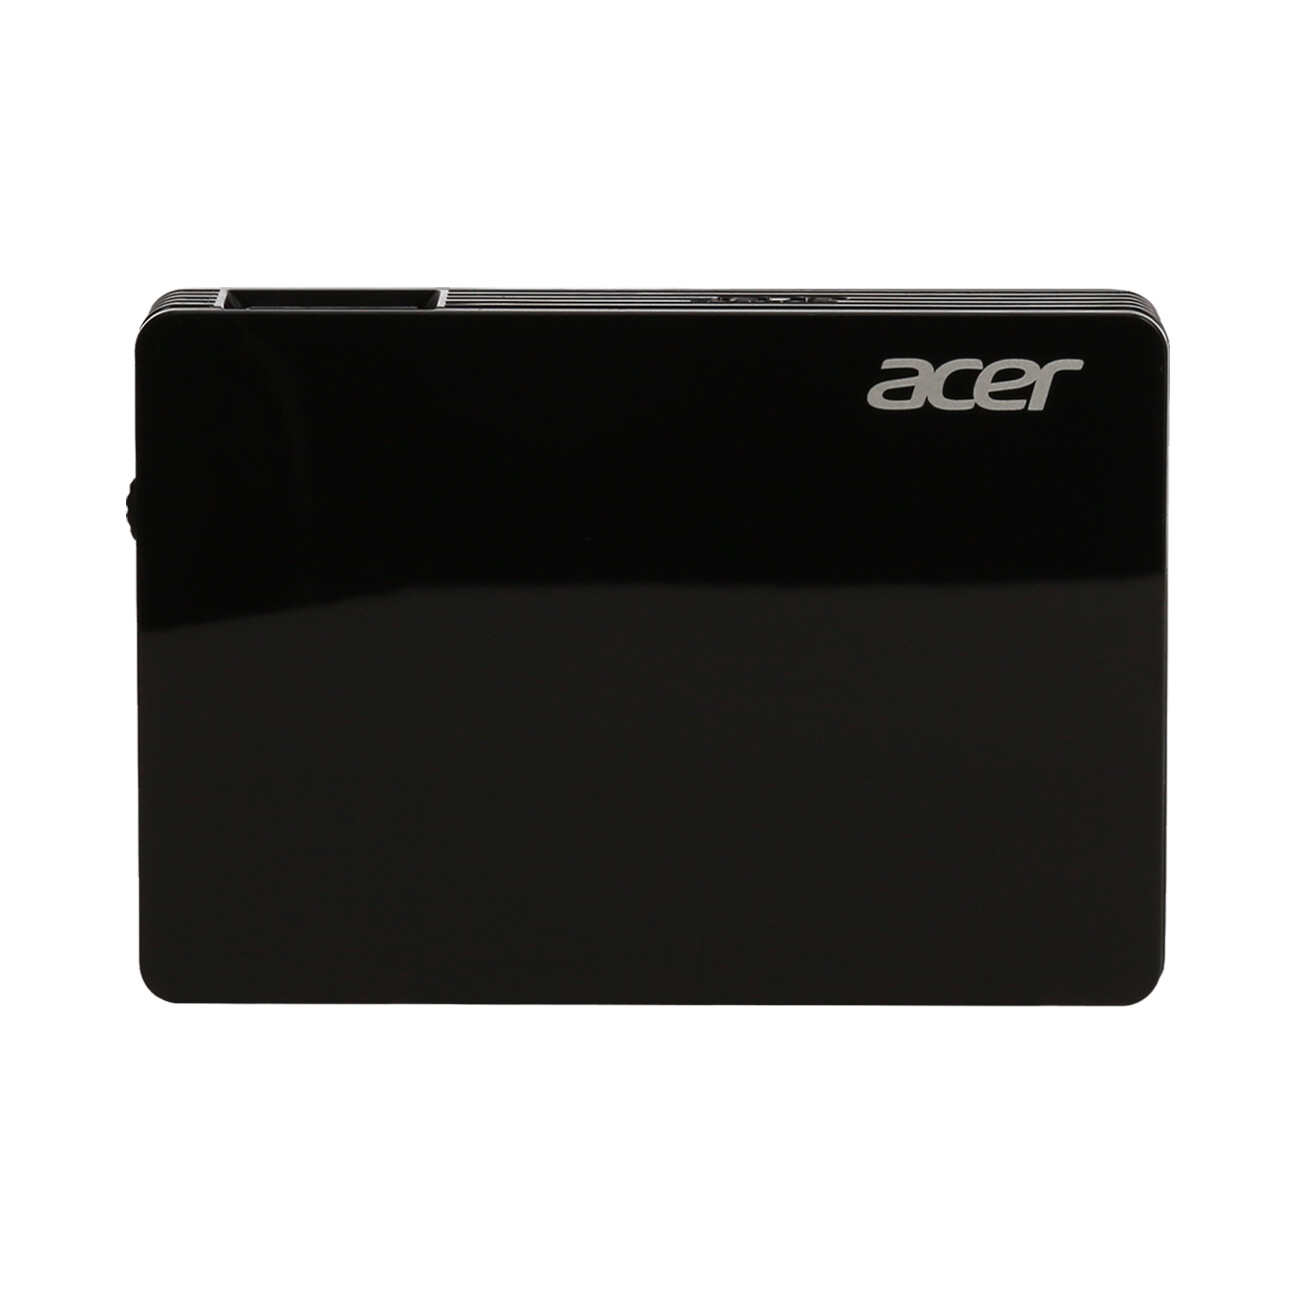 Acer-C120-Demo-Platin